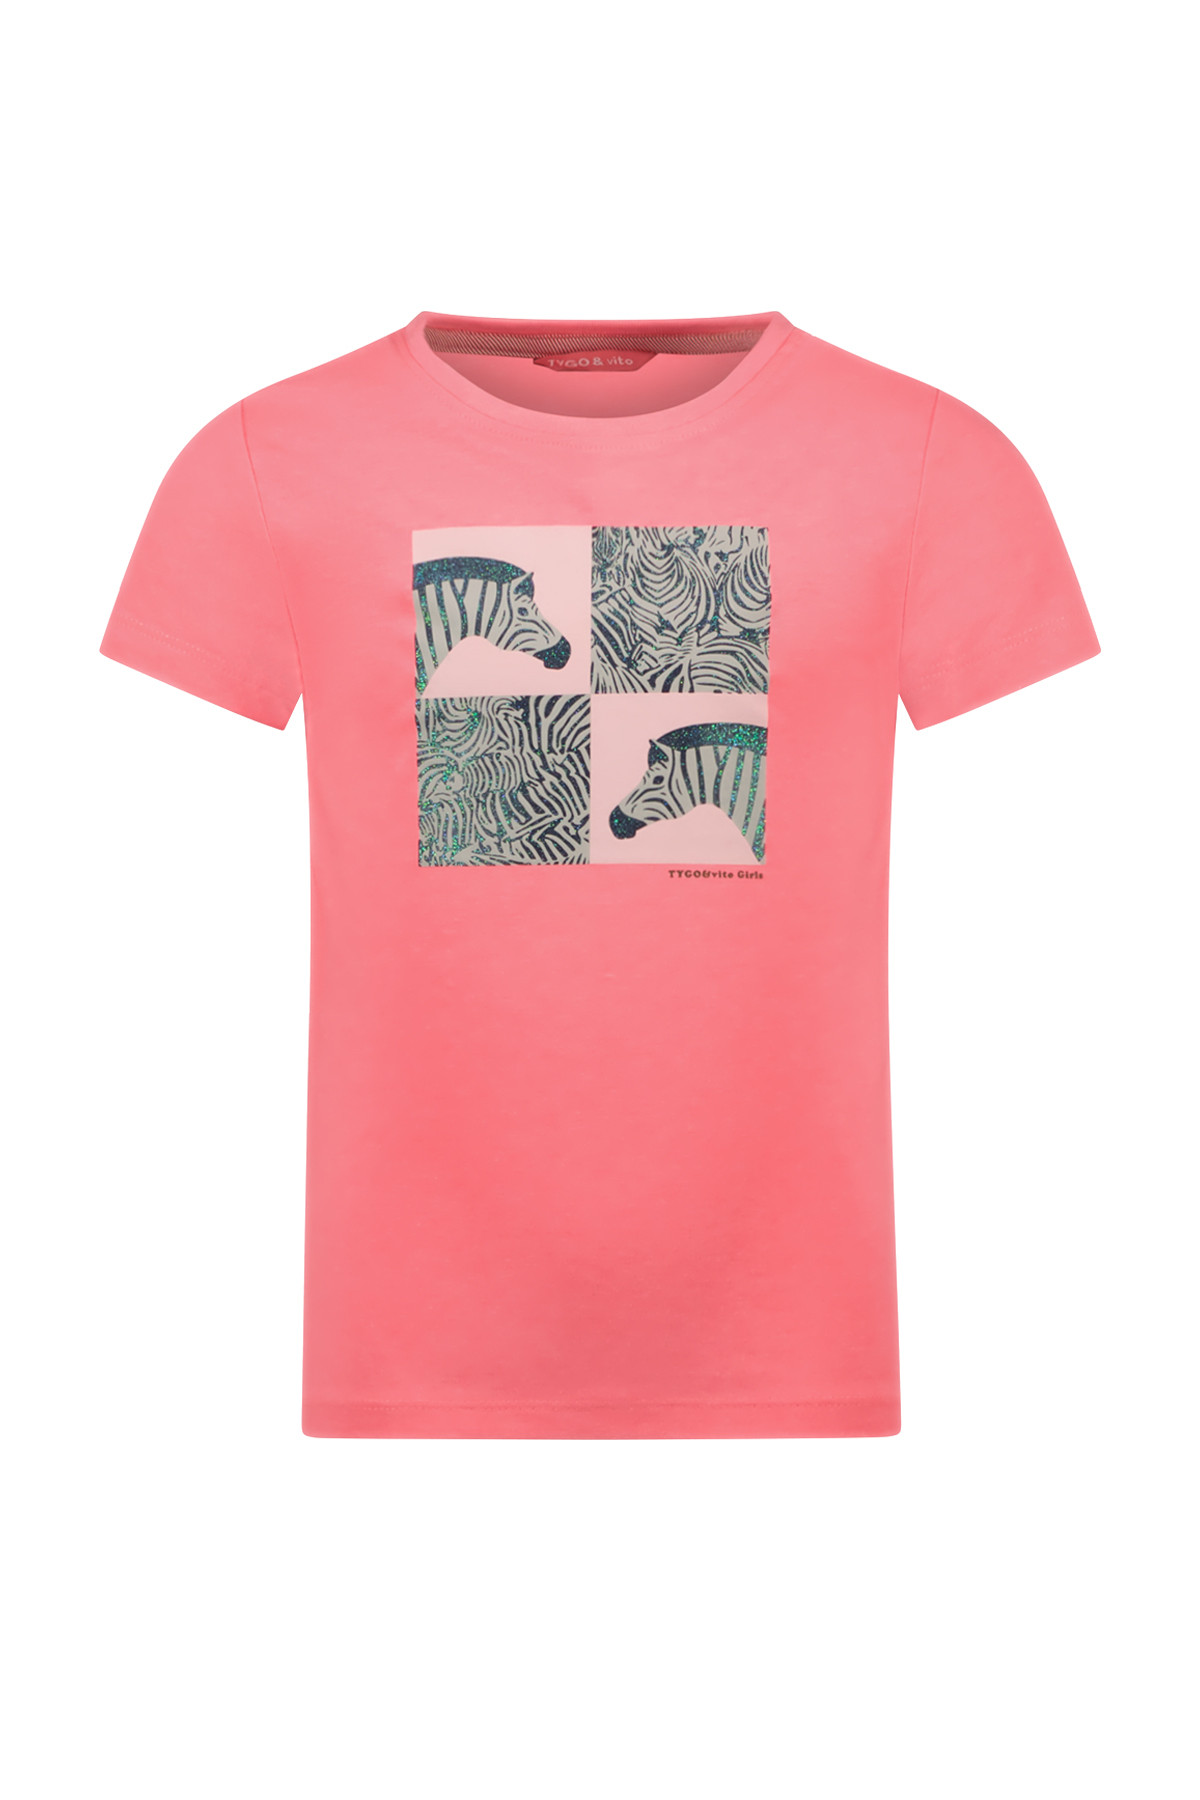 T-shirt Néon Pink - Boutique Toup'tibou - photo 6